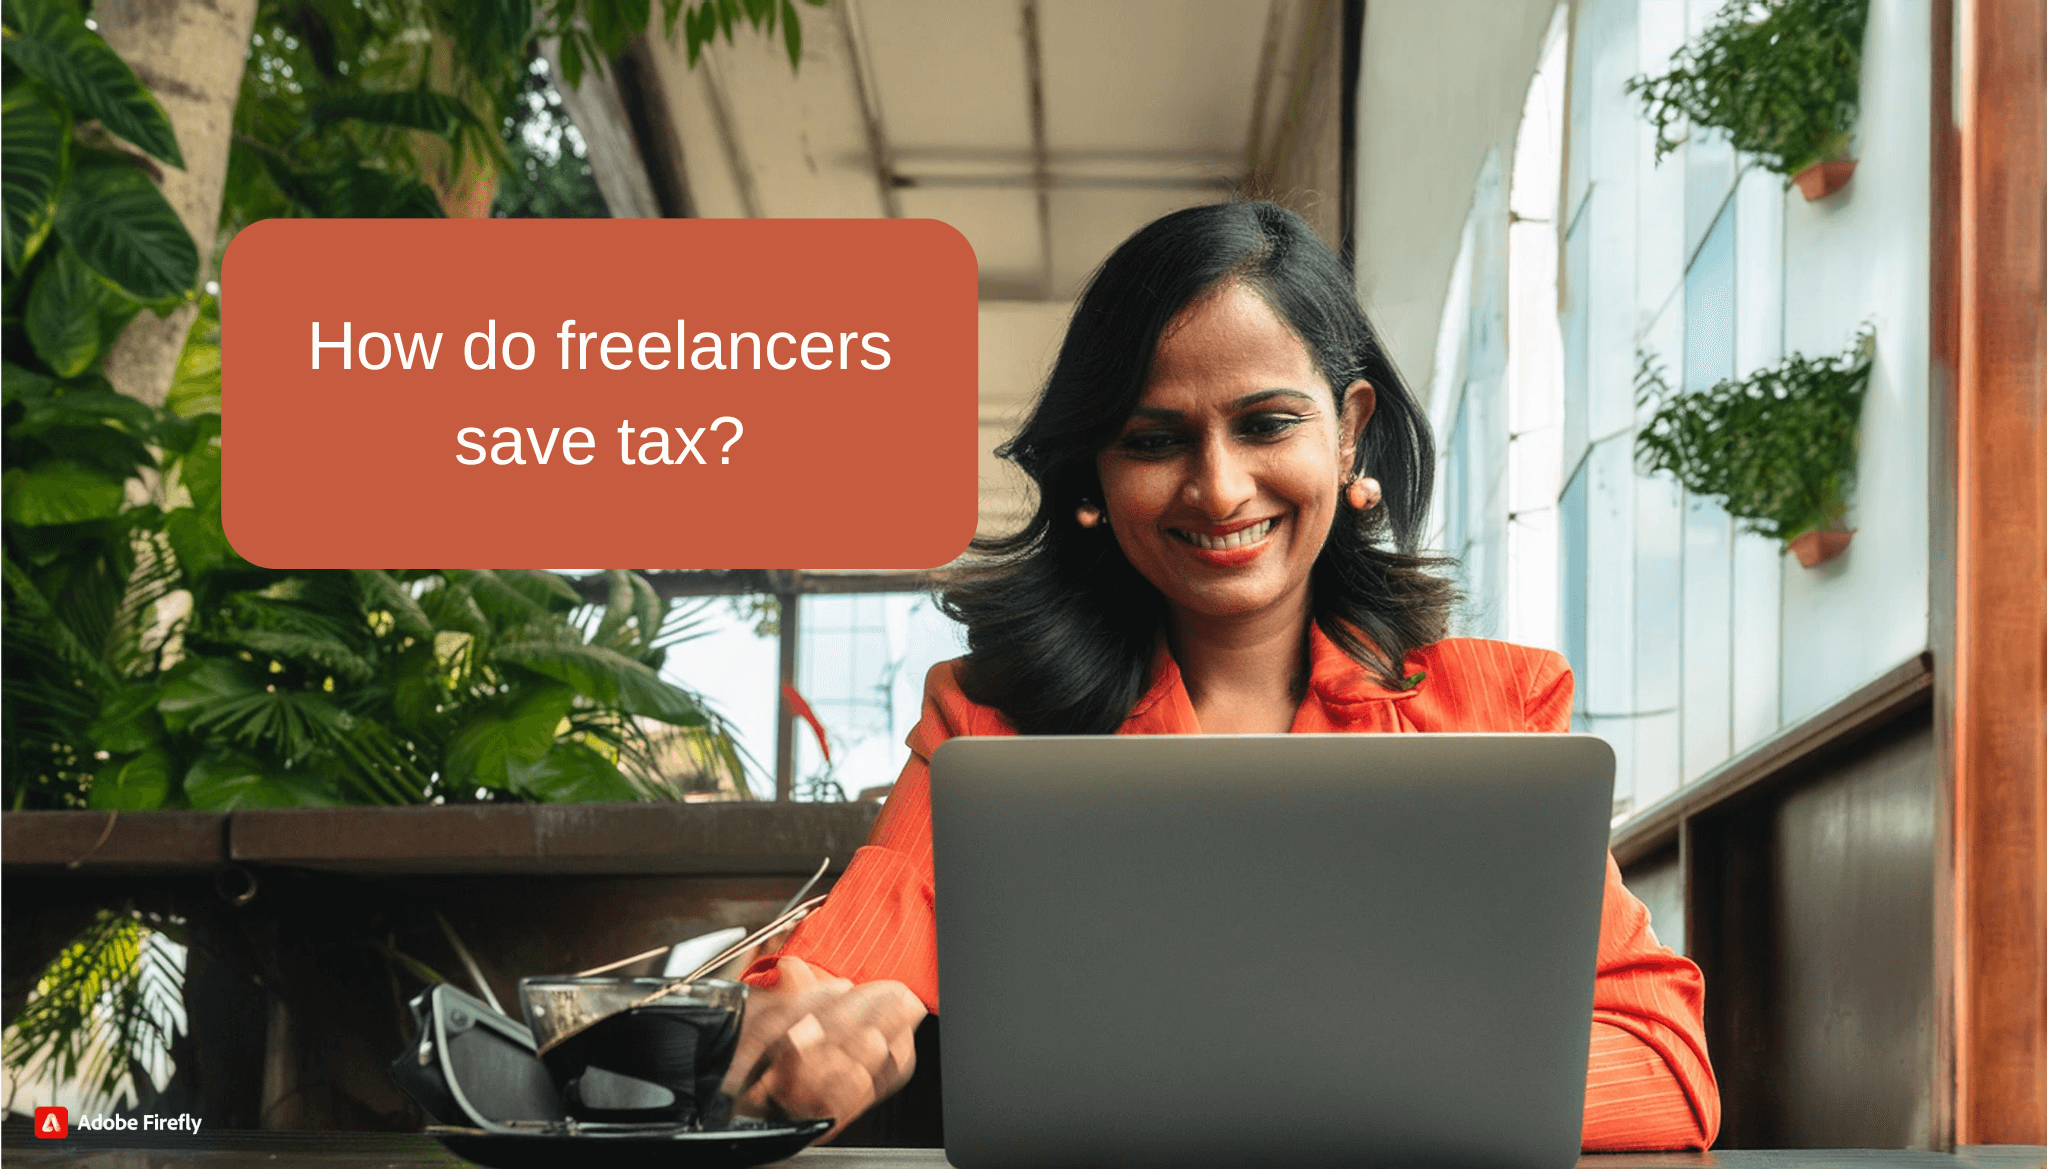 How do freelancers save tax?